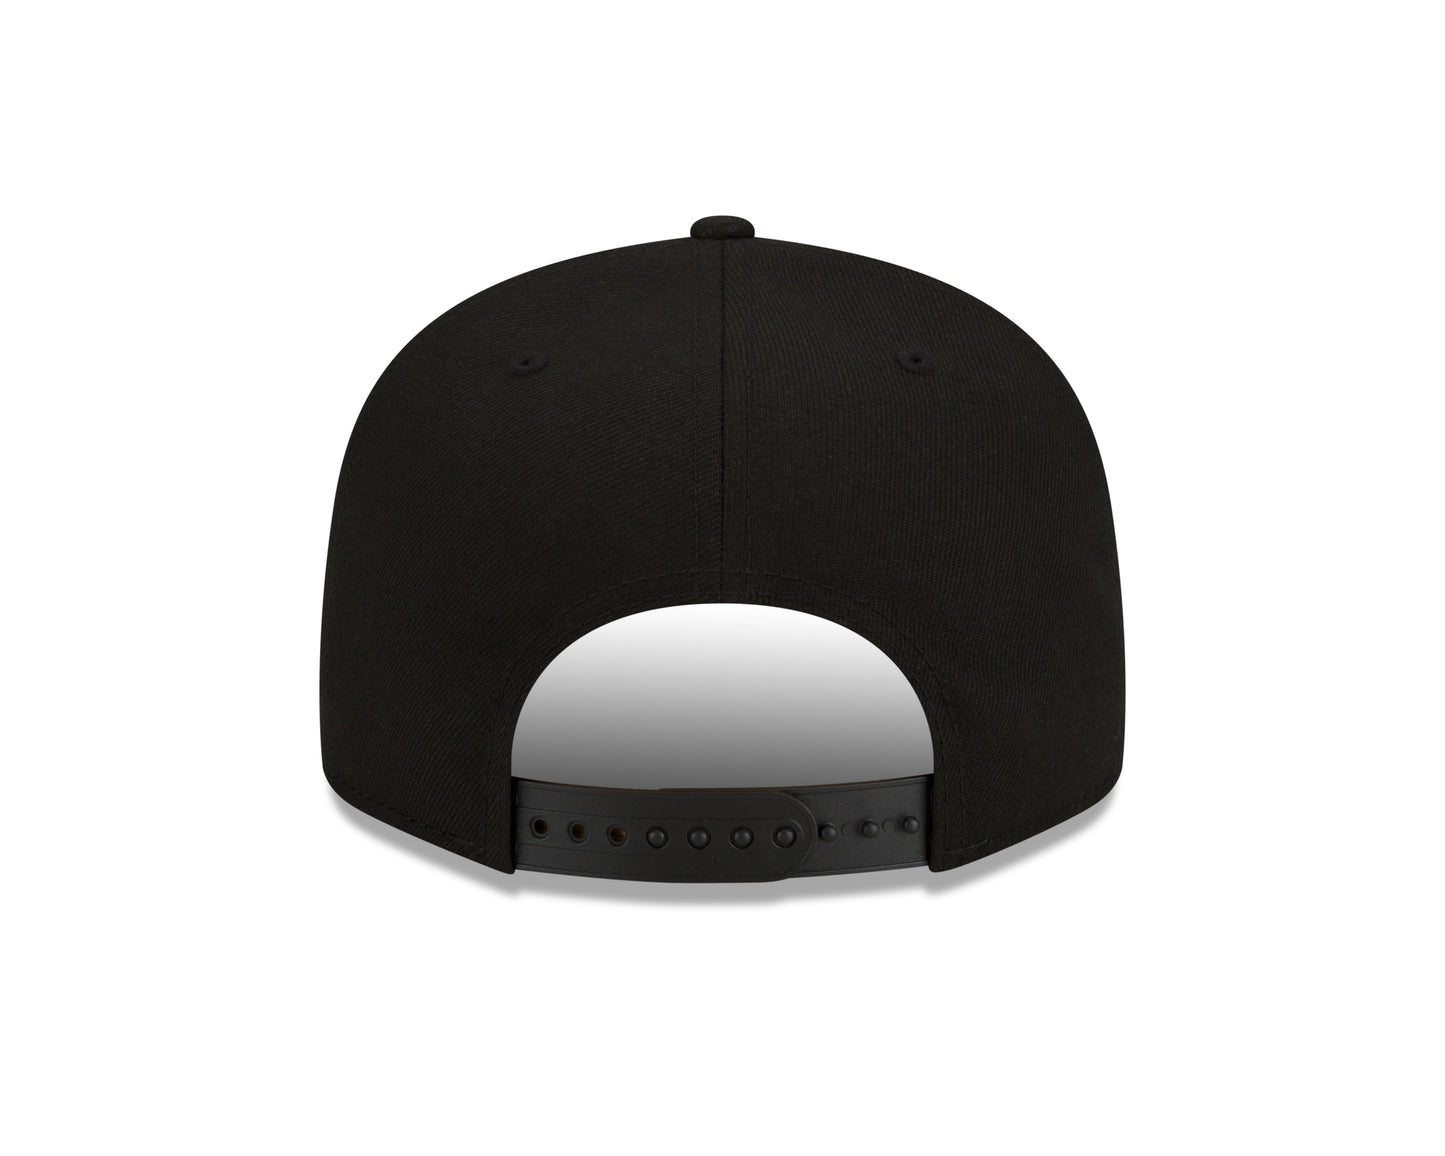 New Era Florida Marlins 1997 World Series Black 9FIFTY Snapback Adjustable Hat